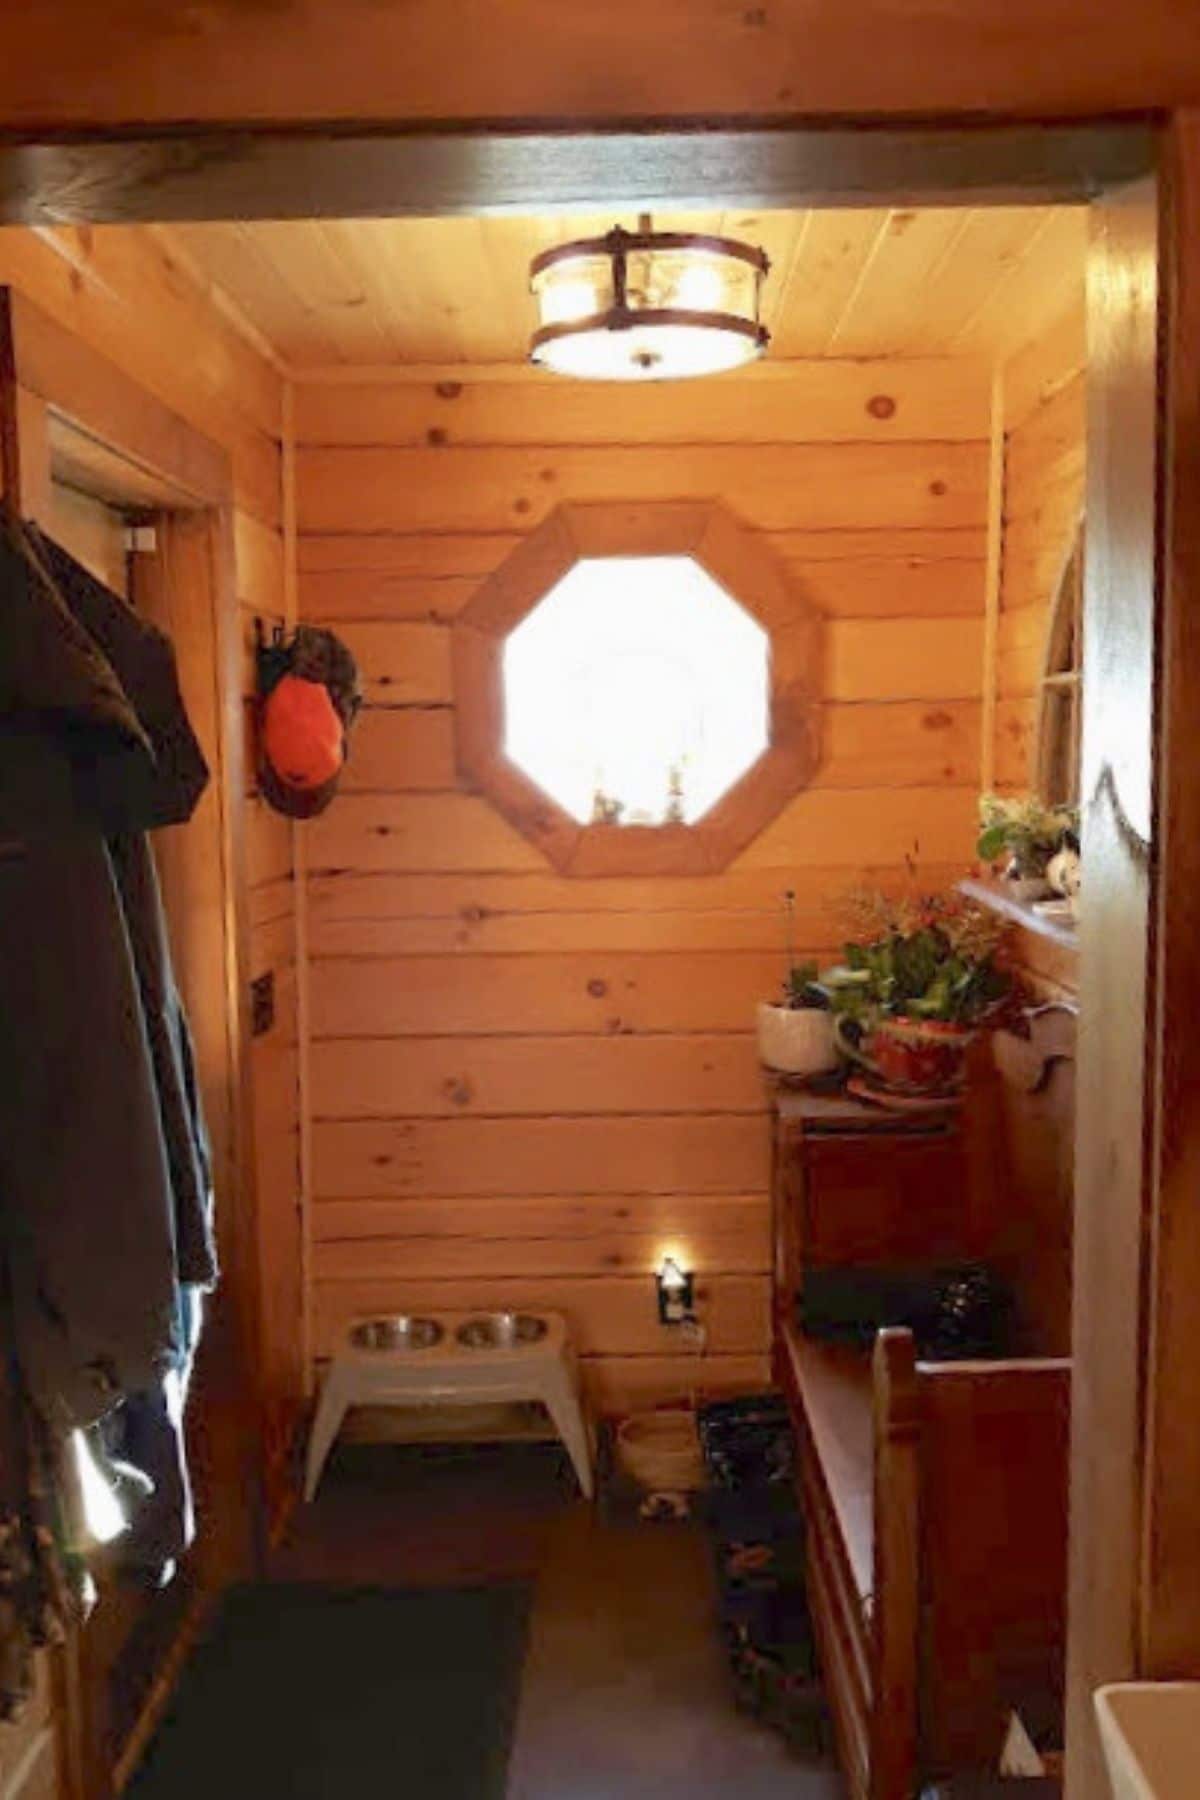 porthole window on wall inside log cabin entrayway